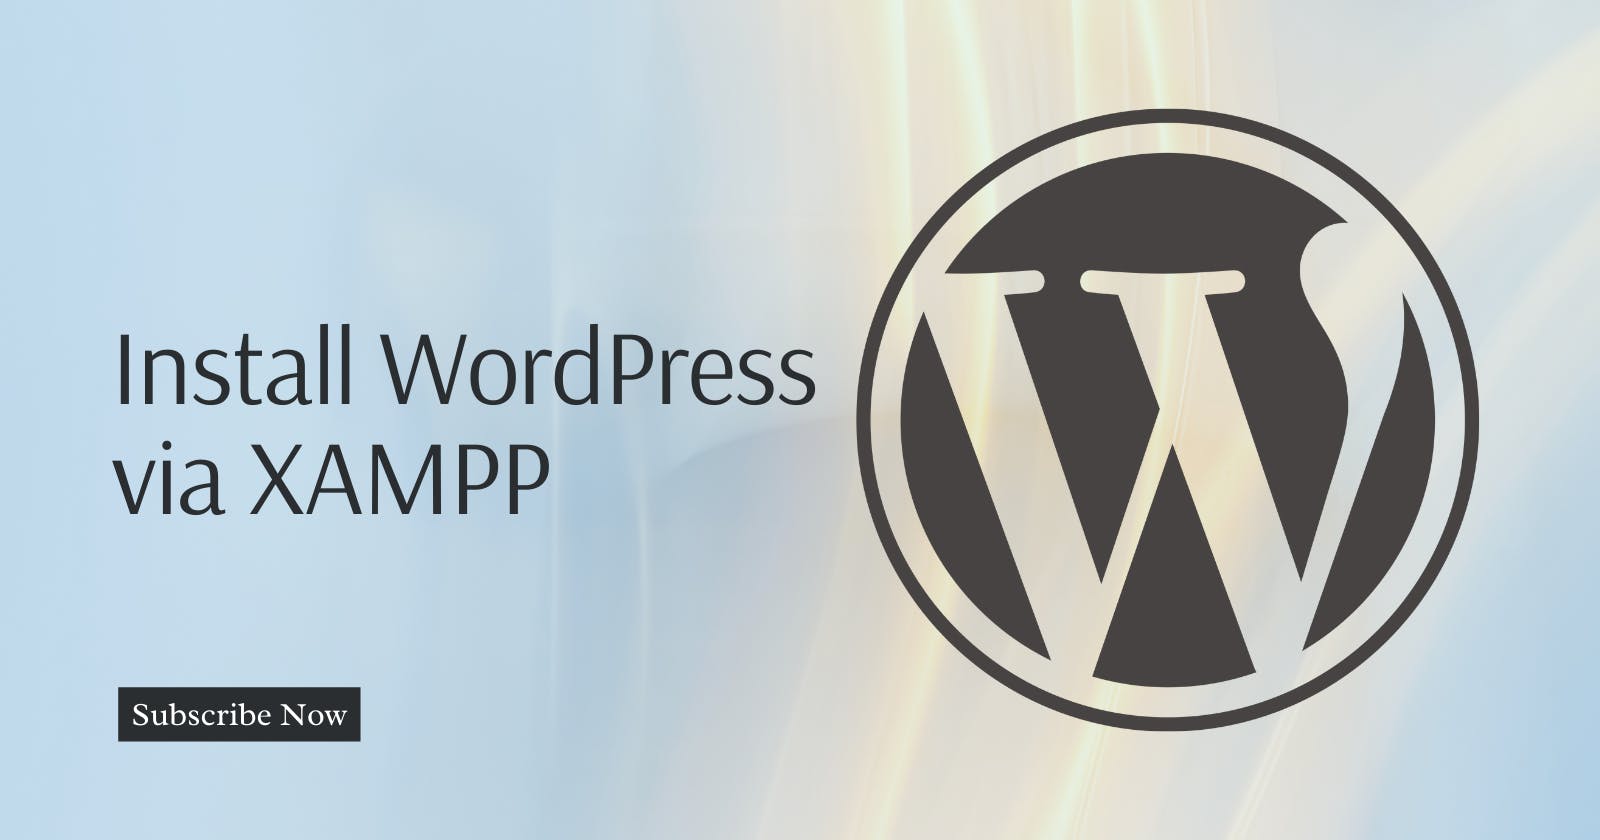 Introduction to WordPress and Setting up Development Environment Using XAMPP